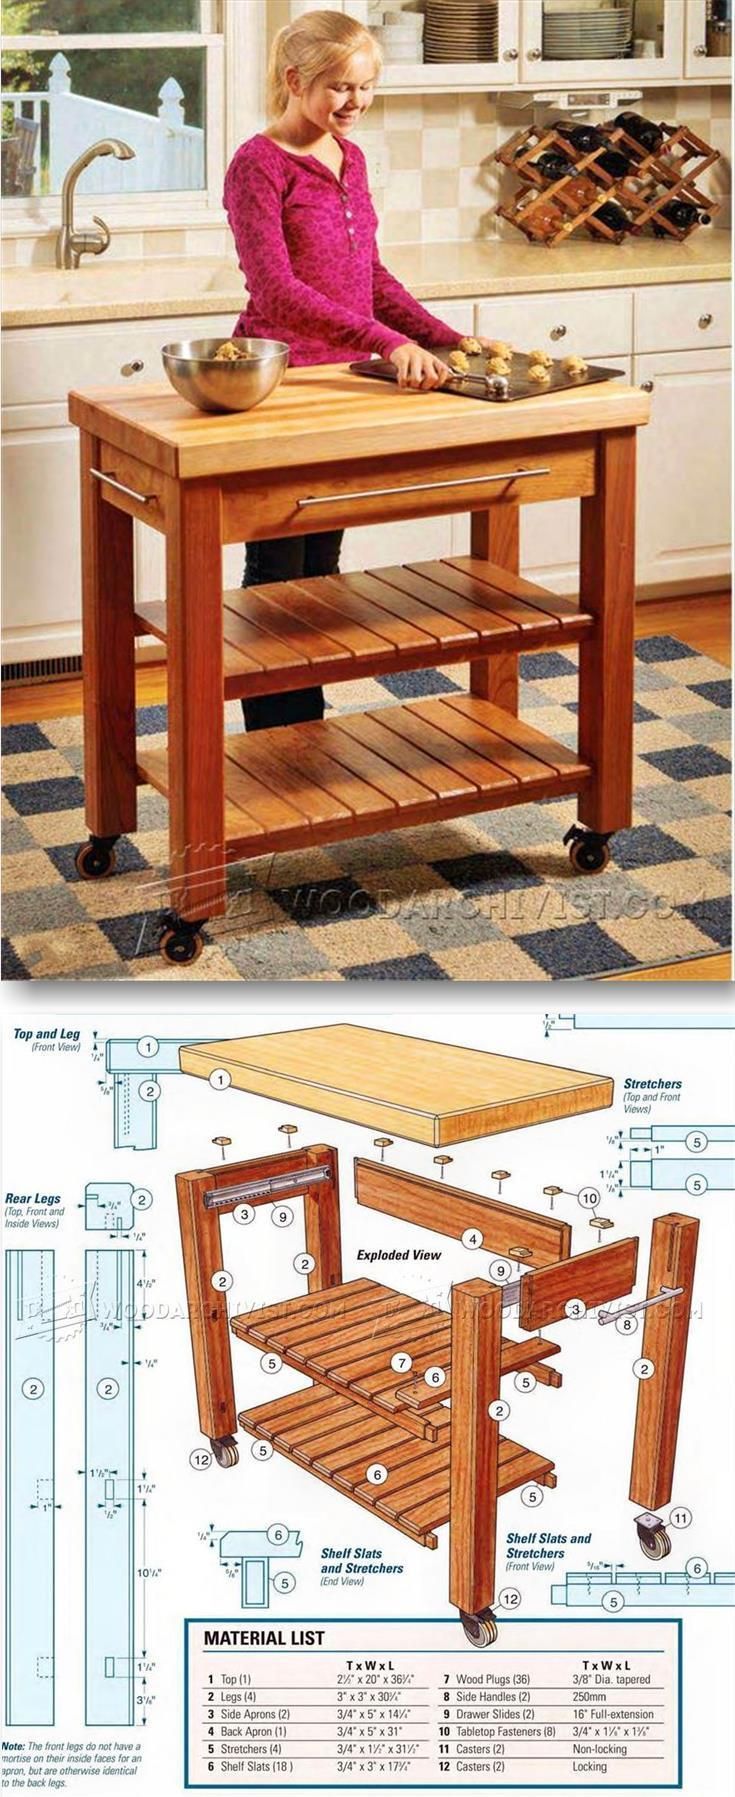 Portable Kitchen Island Plans – Furniture Plans and Projects | WoodArchivist.com